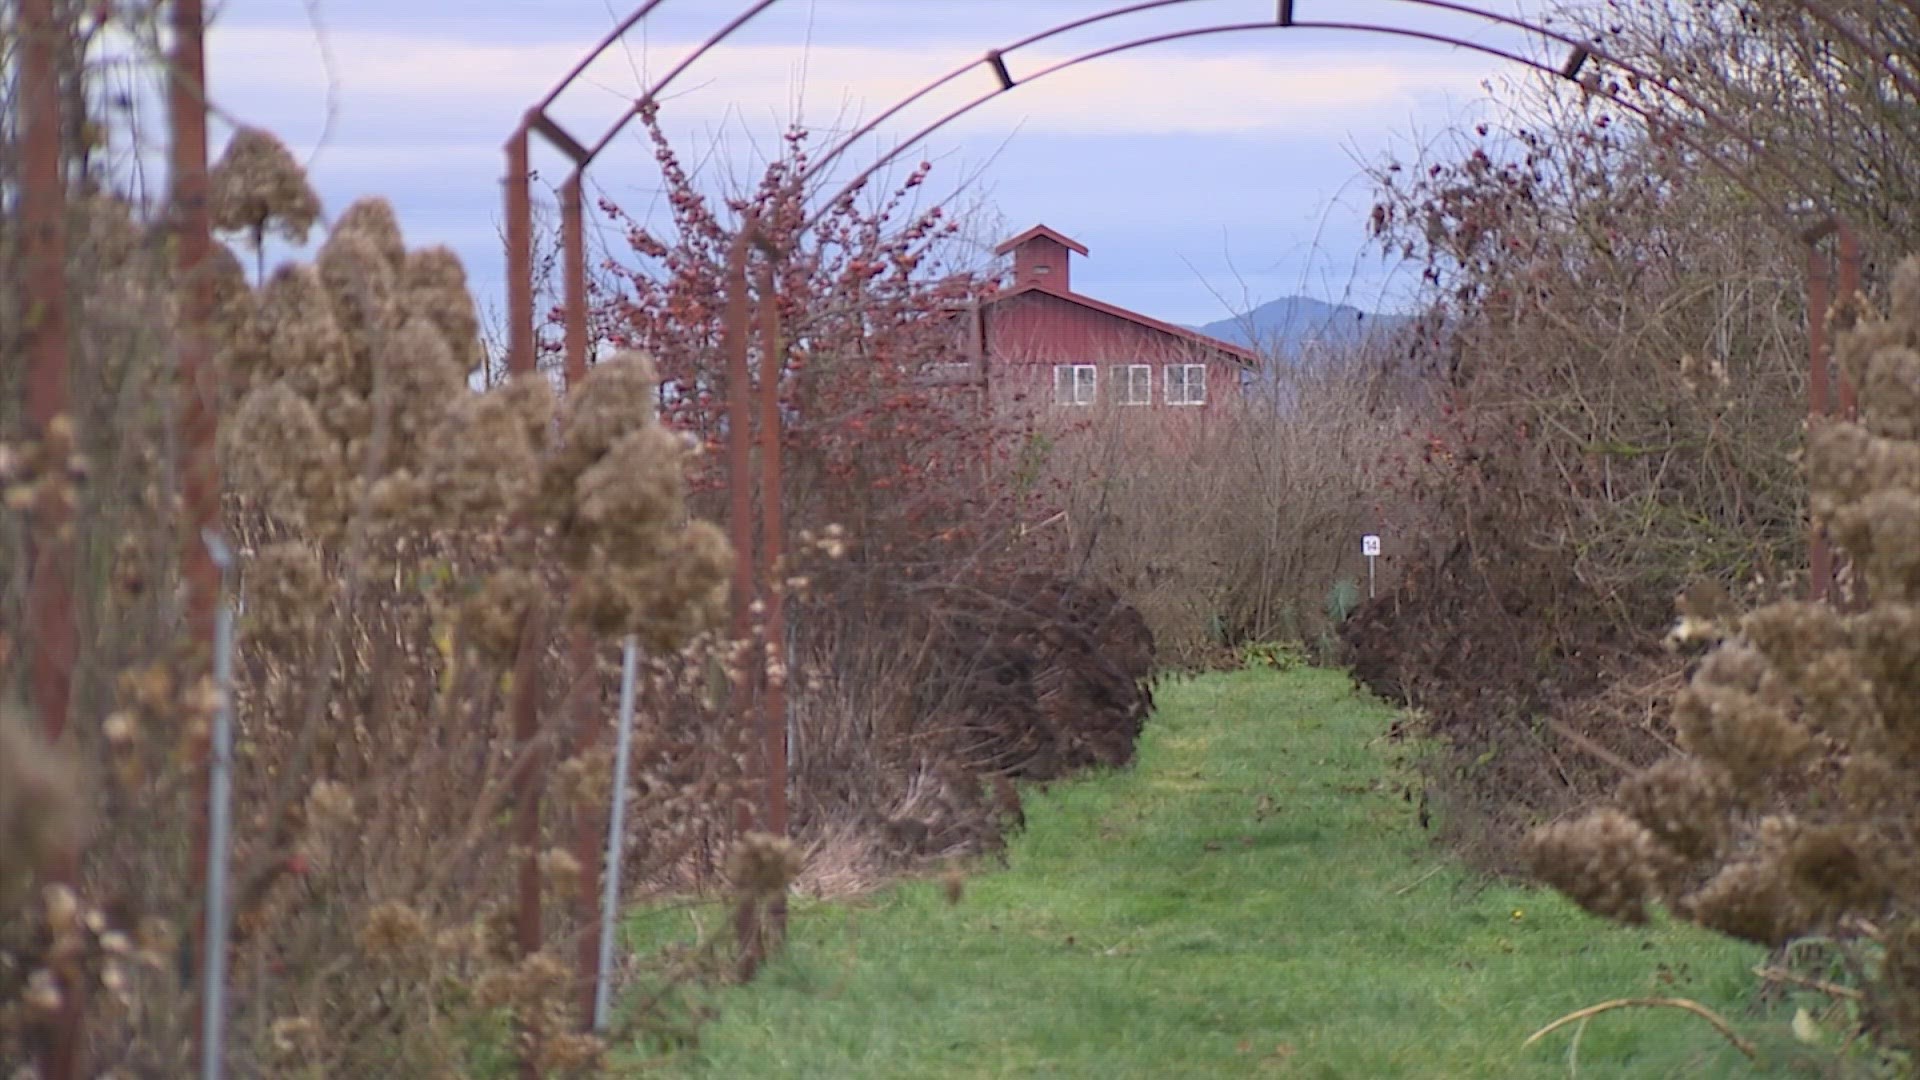 A chance encounter between a Mount Vernon farmer and a Ukrainian gardener is helping her family survive.